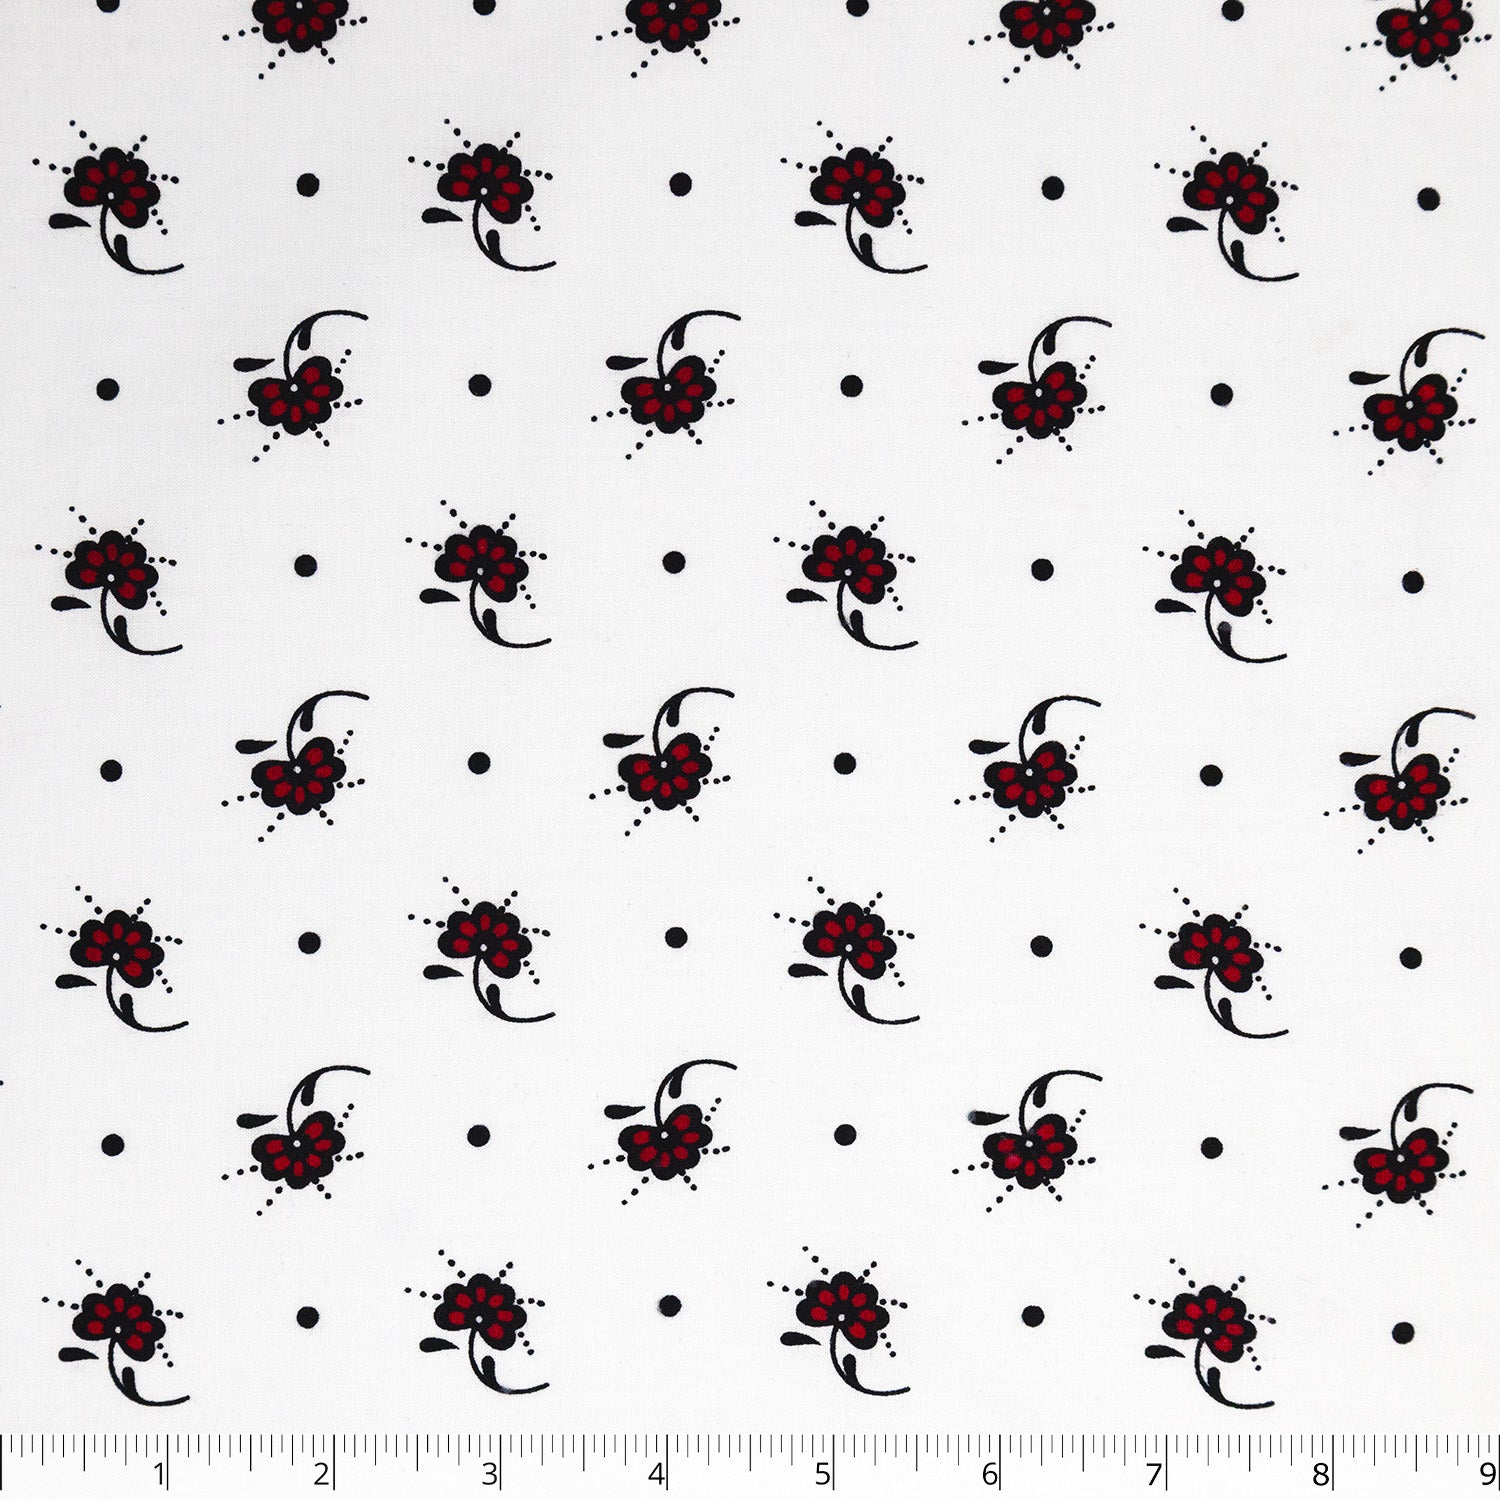 Red & Black Flowered & Spot'd Cotton - $18.00 yd. - Burnley & Trowbridge Co.